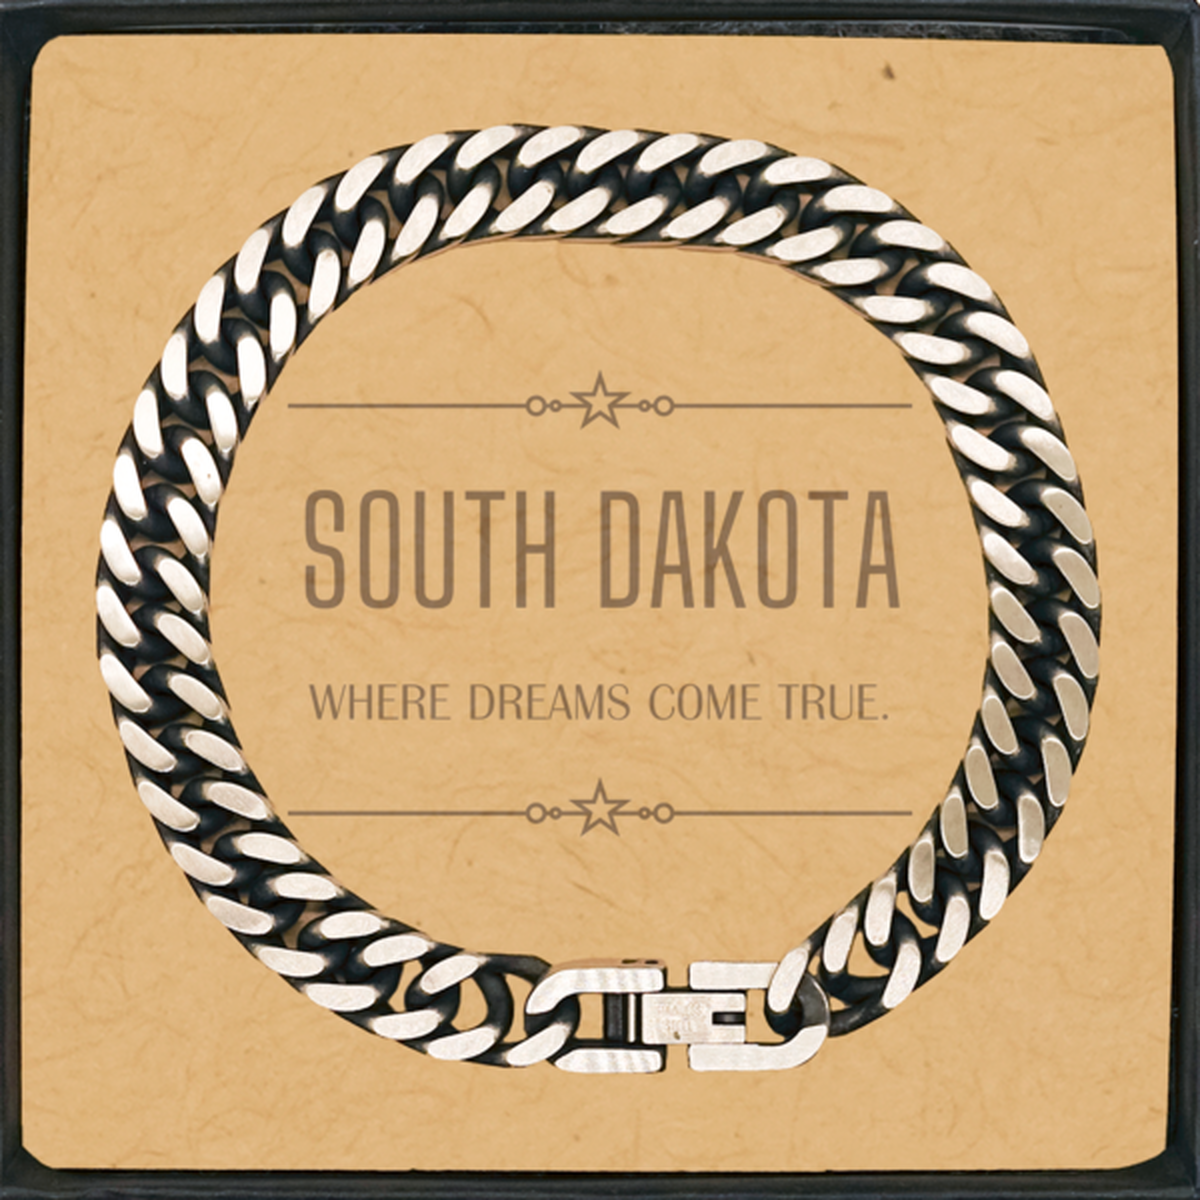 Love South Dakota State Cuban Link Chain Bracelet, South Dakota Where dreams come true, Birthday Inspirational Gifts For South Dakota Men, Women, Friends